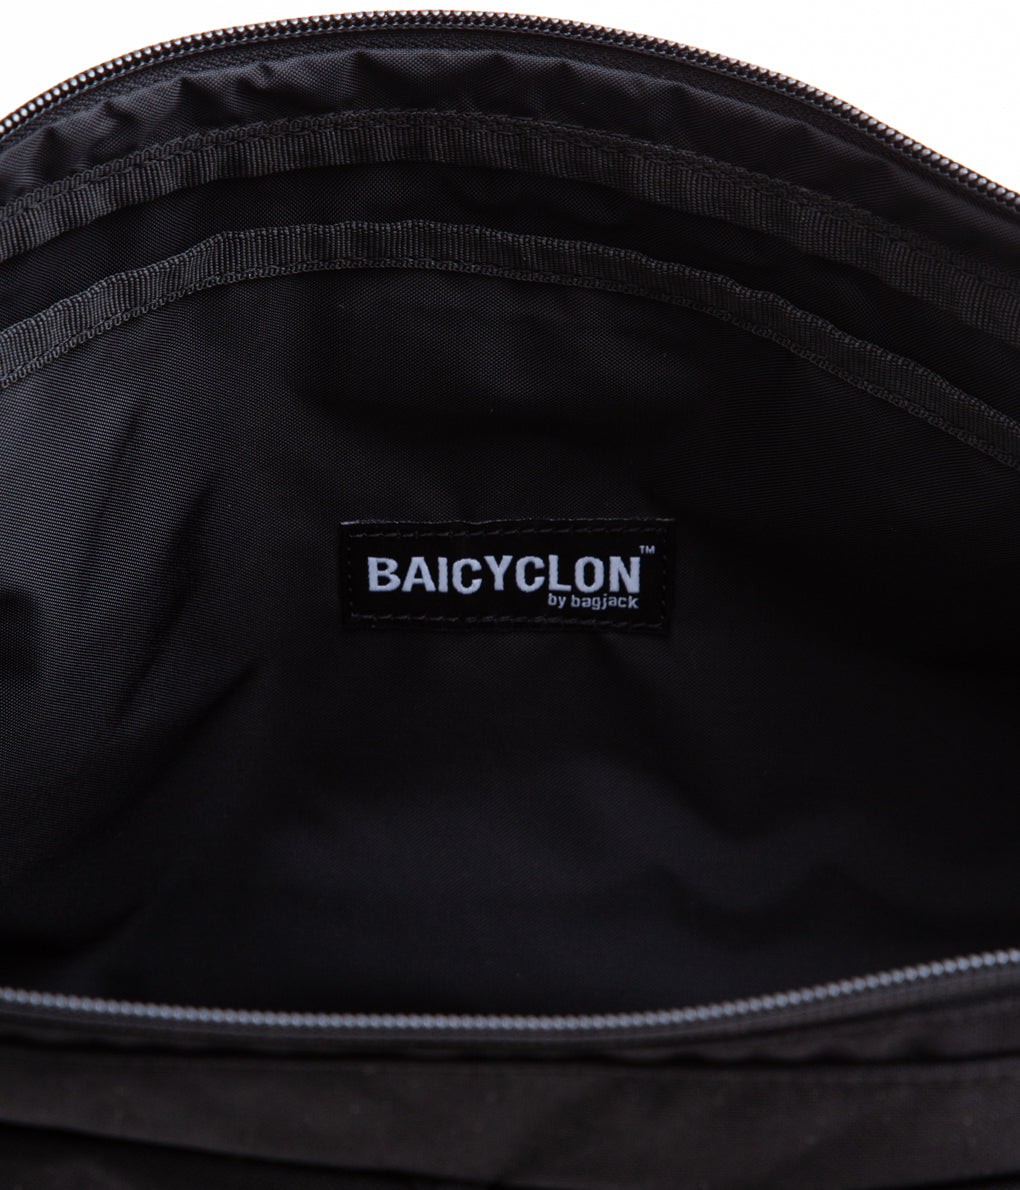 BAICYCLON BY BAGJACK"NEW SHOULDER BAG"(BLACK)